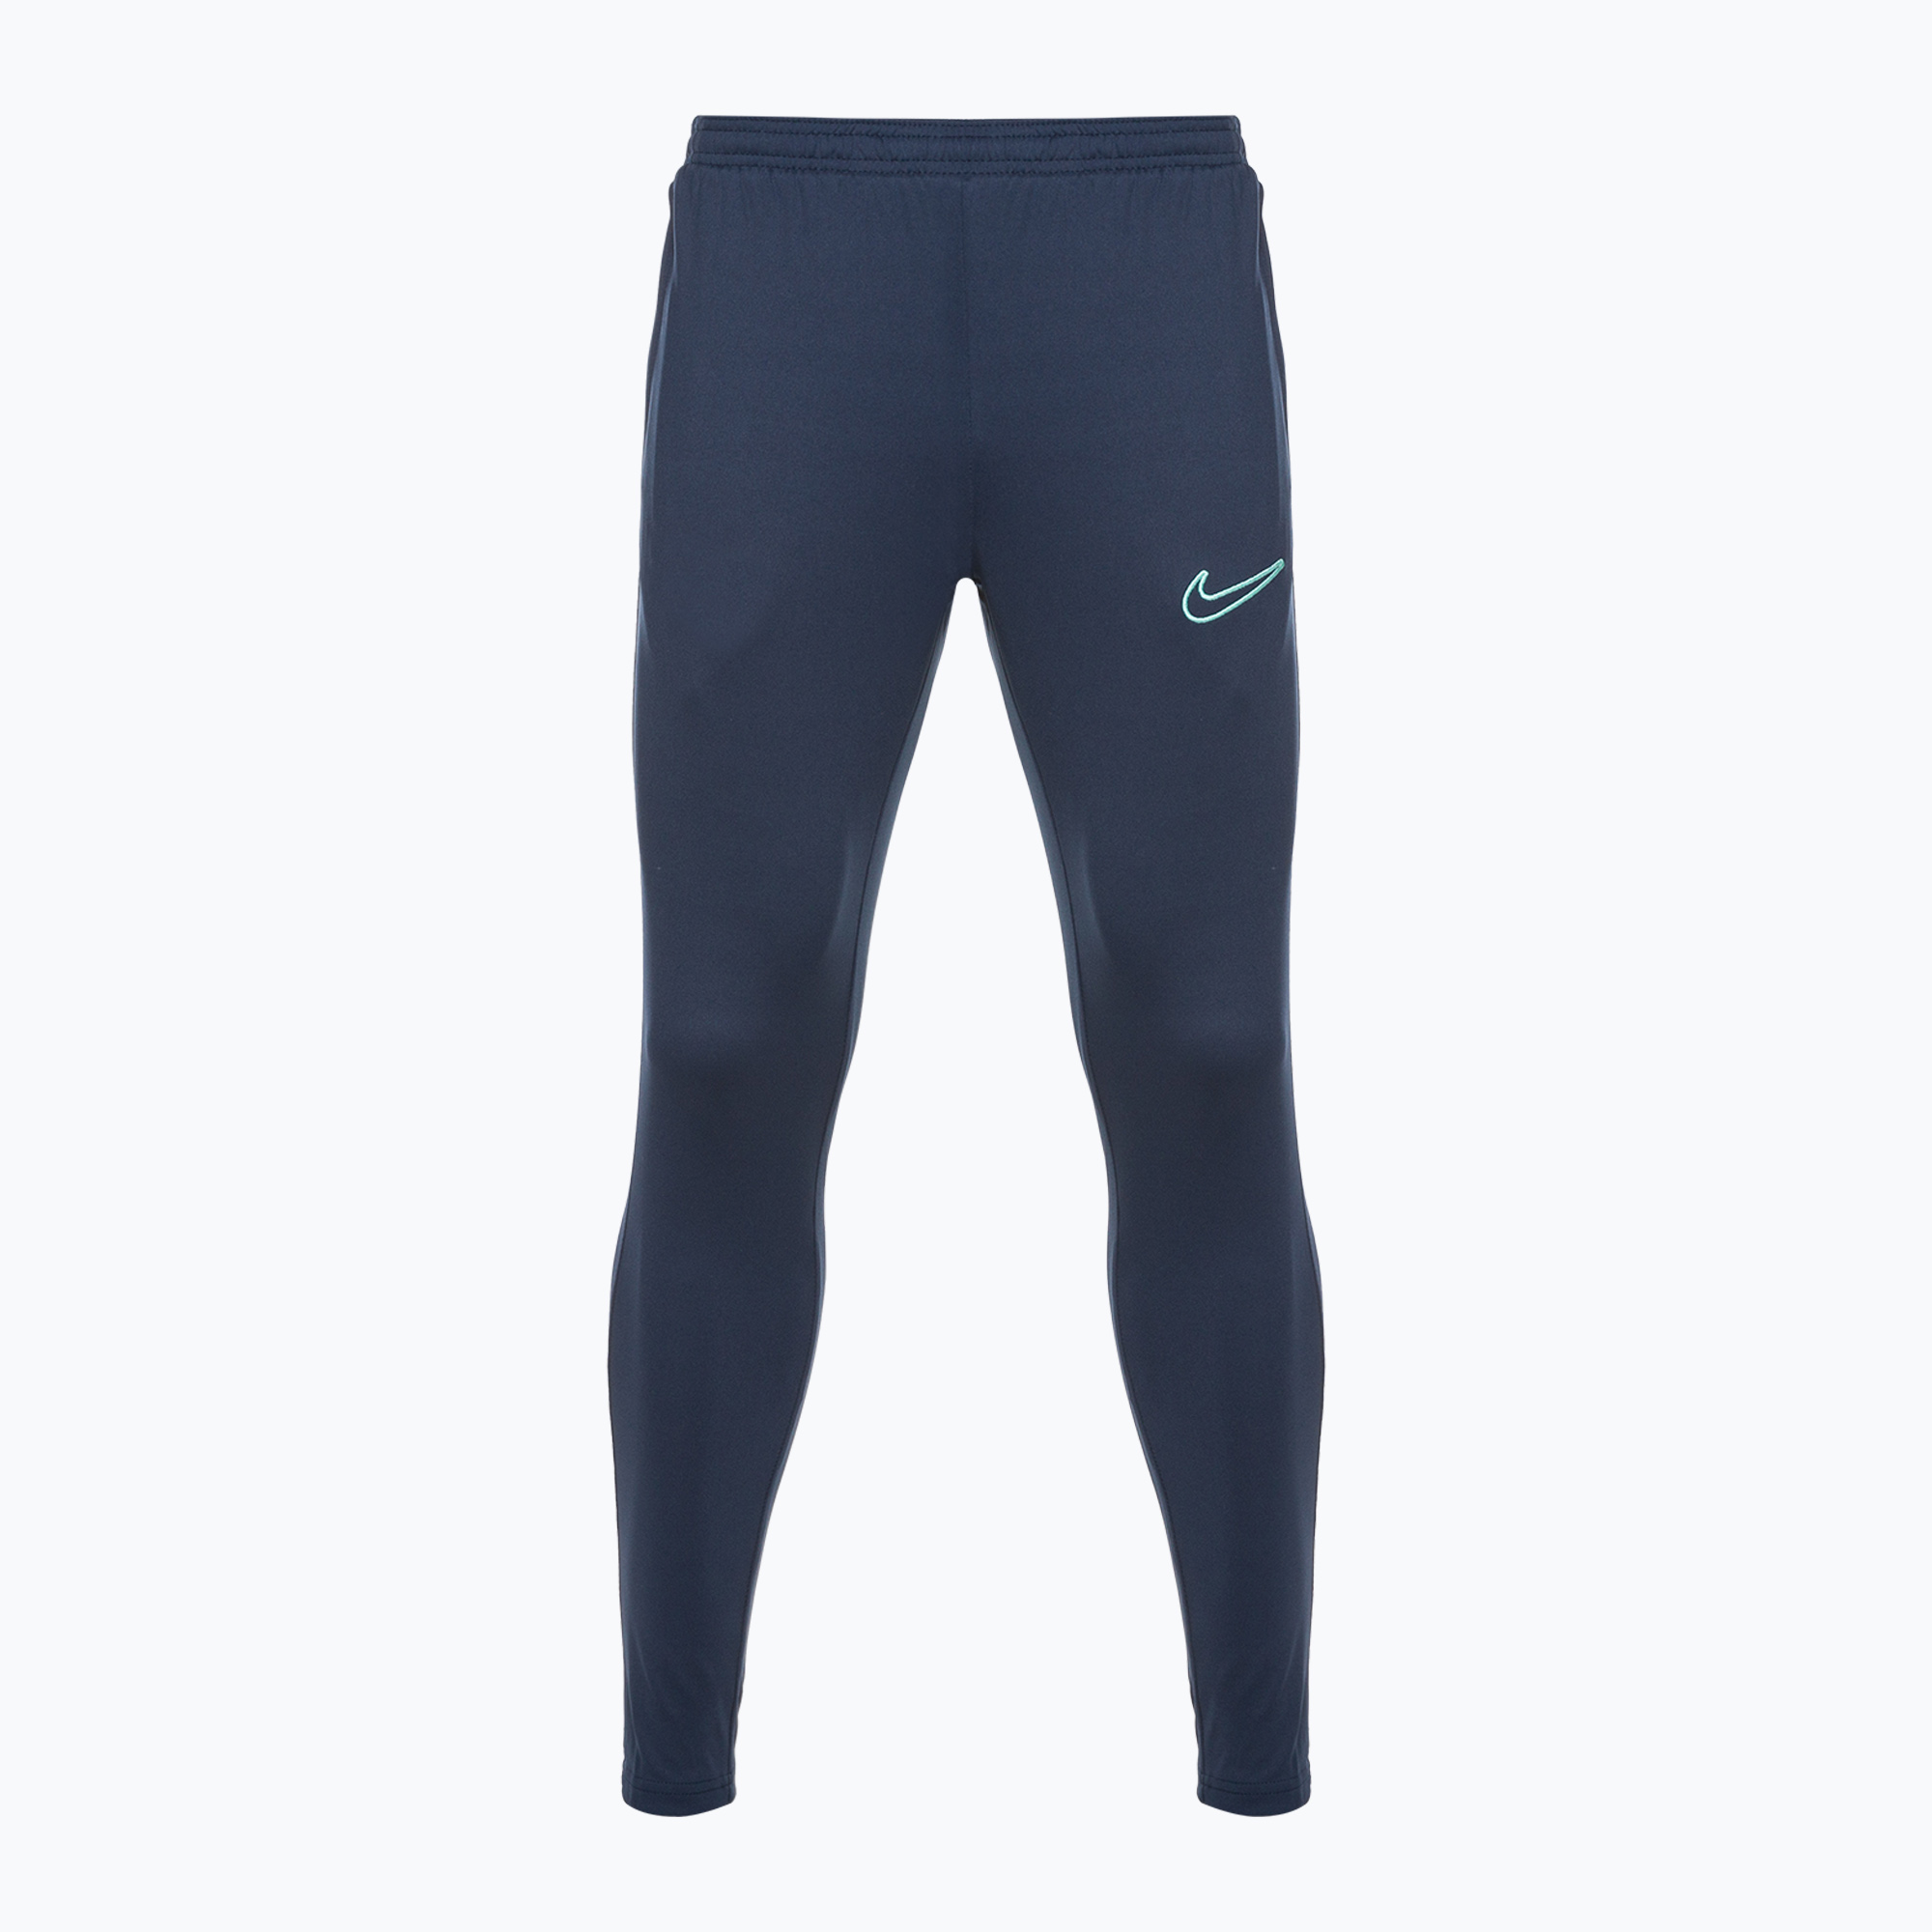 Pánske futbalové nohavice Nike Dri-Fit Academy midnight navy/midnight navy/hyper turquoise